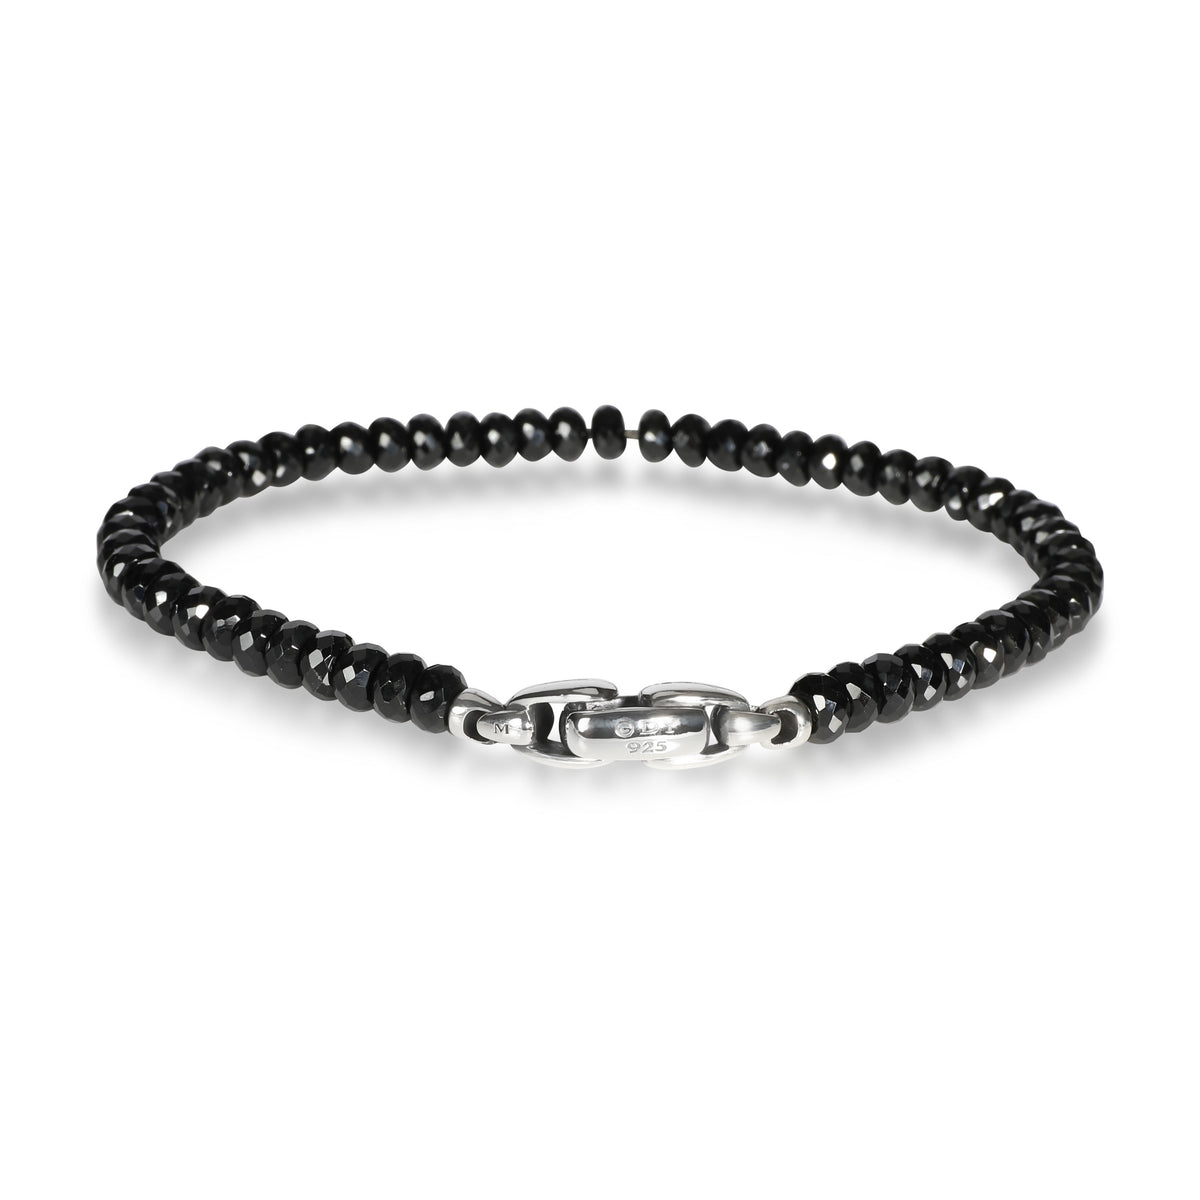 David Yurman Spiritual Beads Bracelet in  Sterling Silver